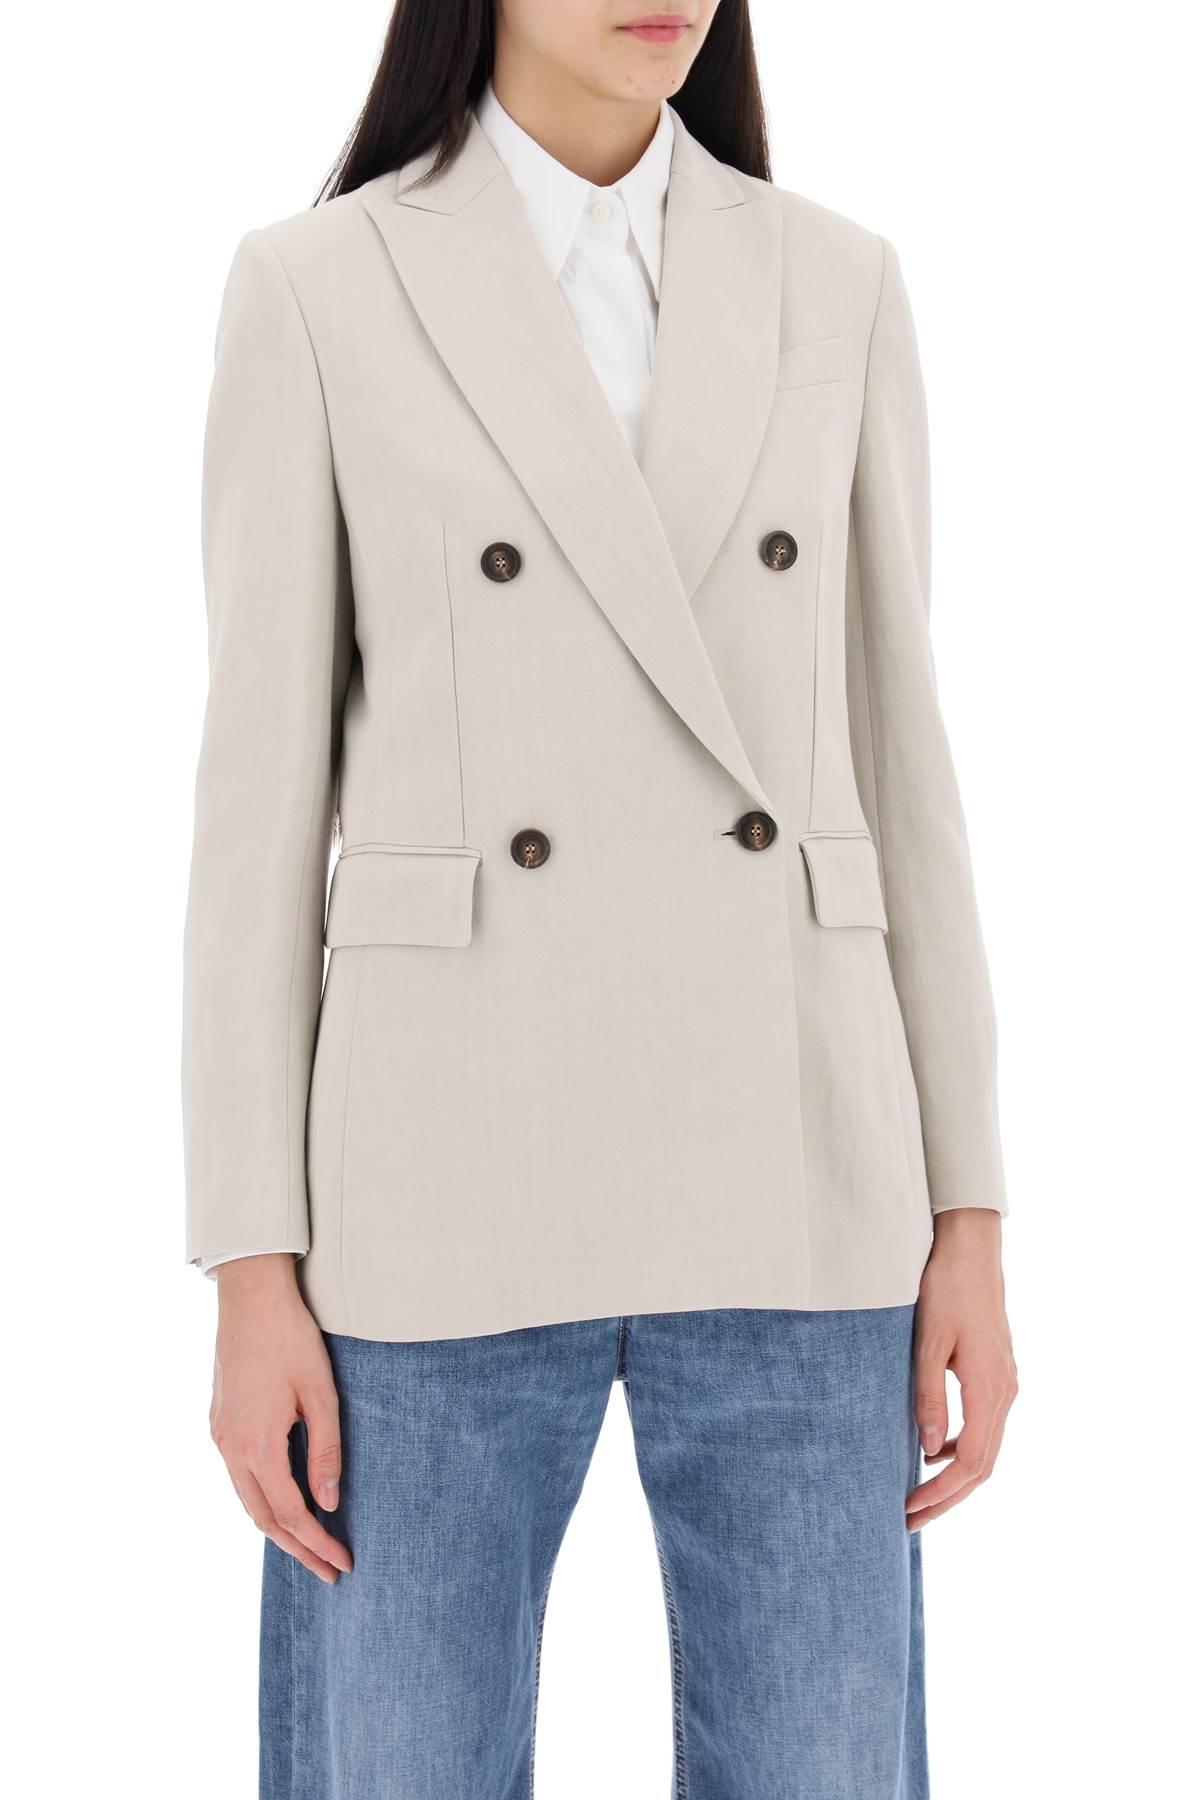 Brunello cucinelli twill jacket with monile detail-Jacket-BRUNELLO CUCINELLI-Urbanheer